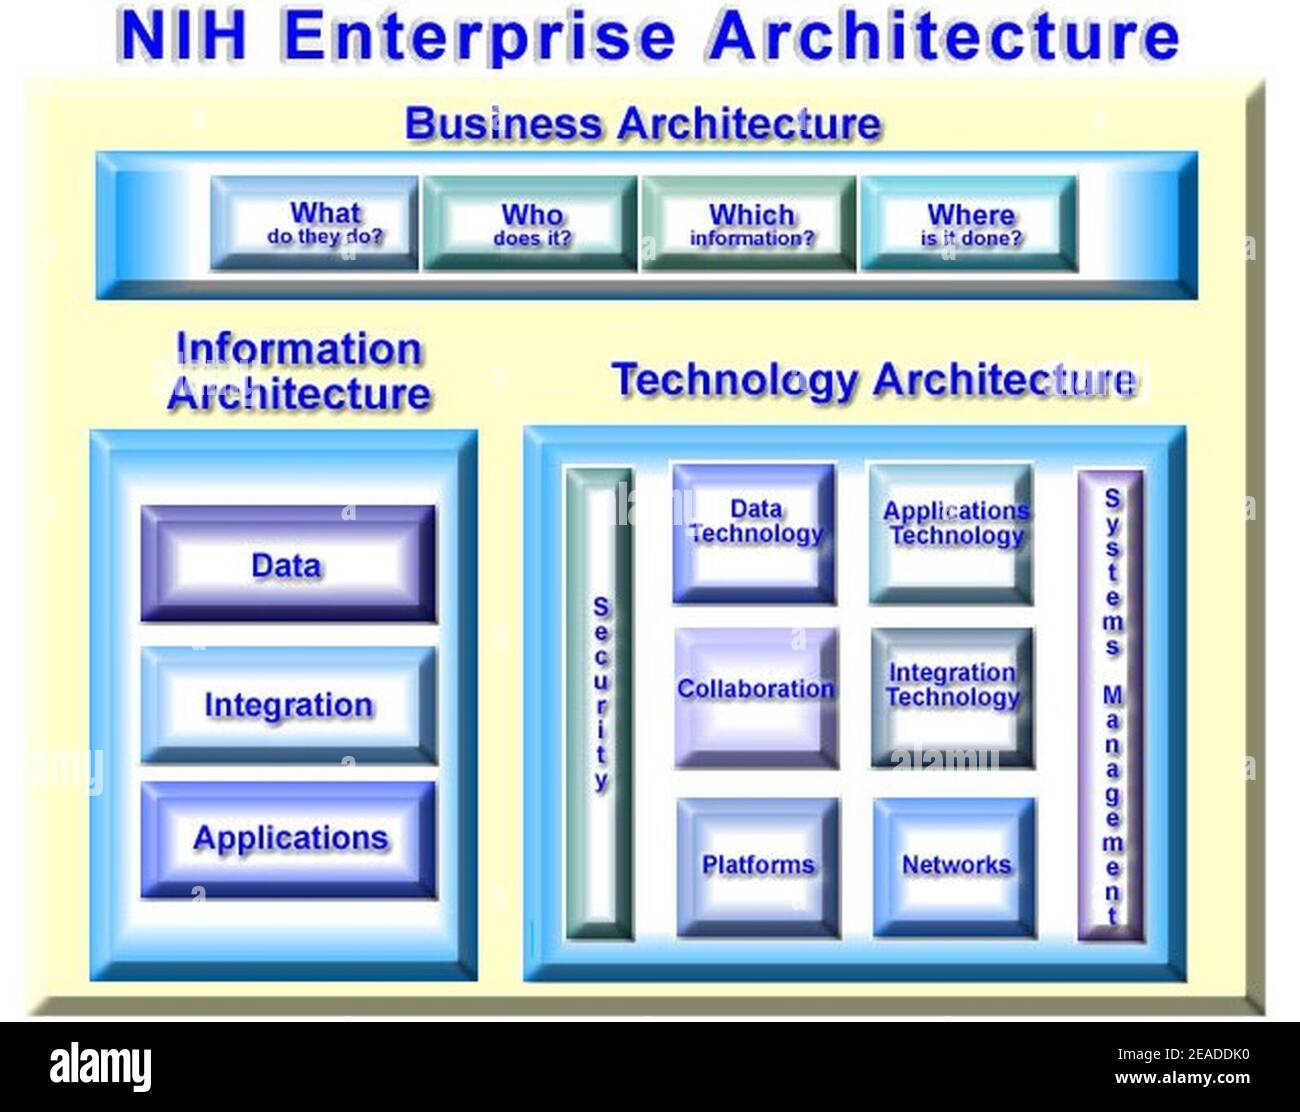 NIH IT Enterprise Architecture Framework. Stockfoto